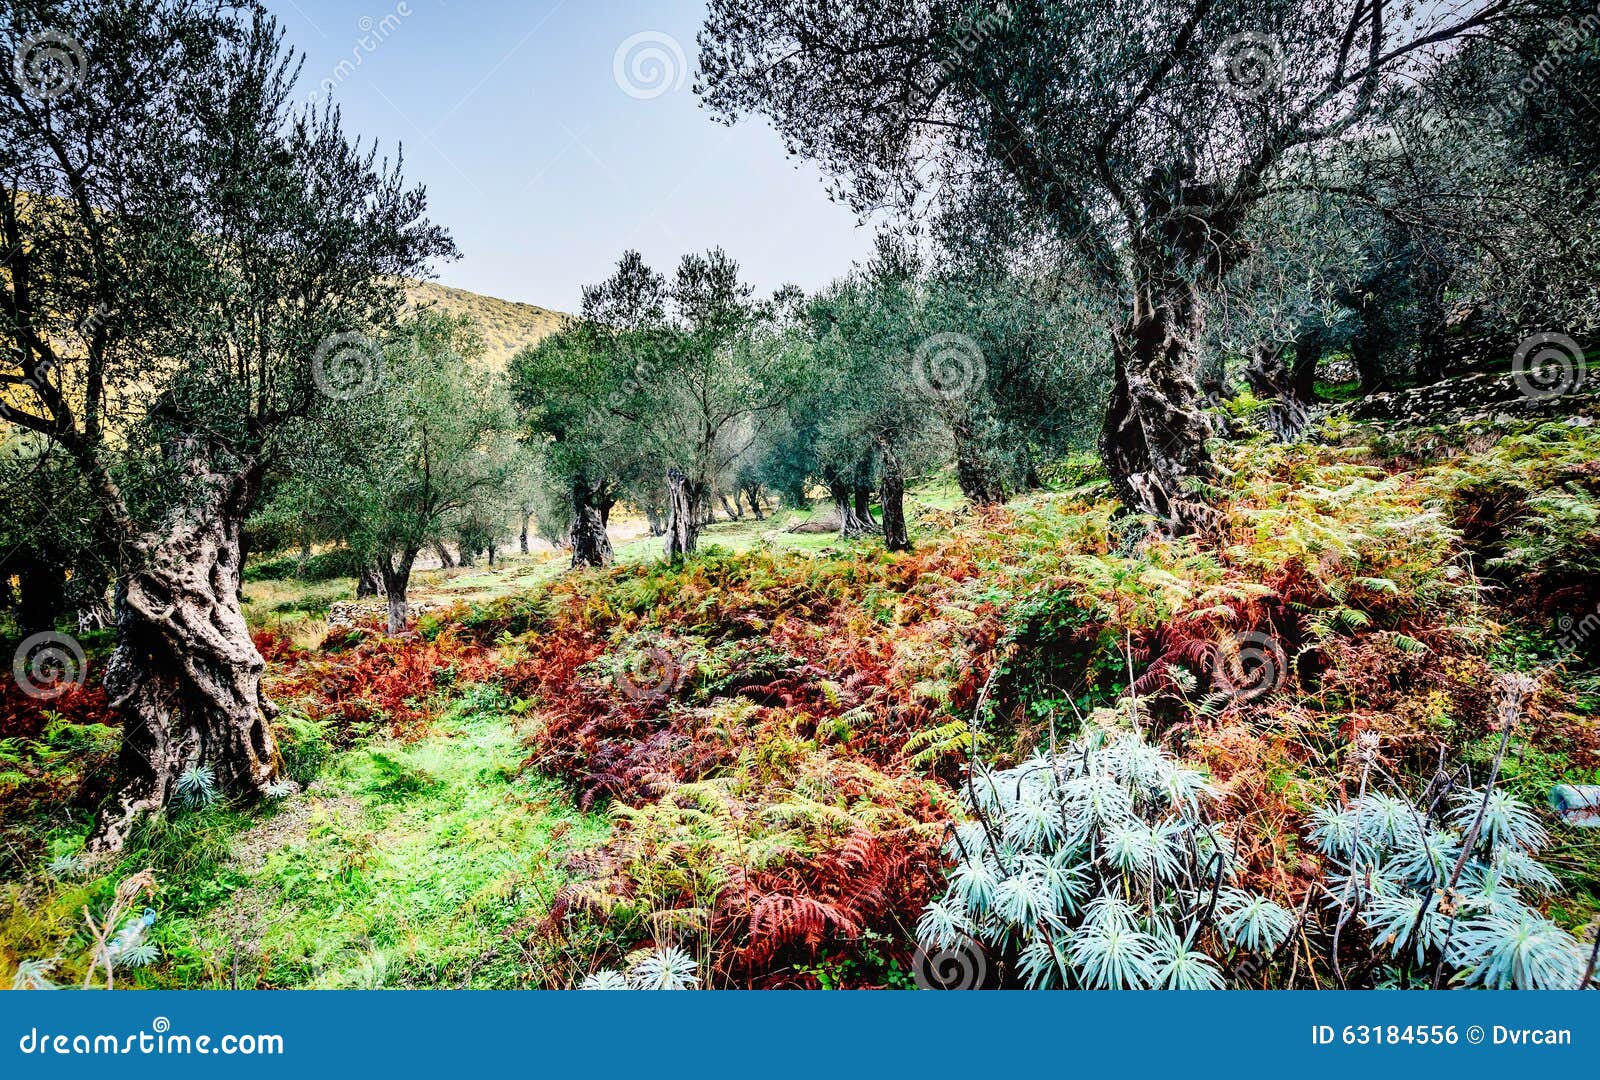 olive trees in autumn in valdanos, ulcinj,montenegro